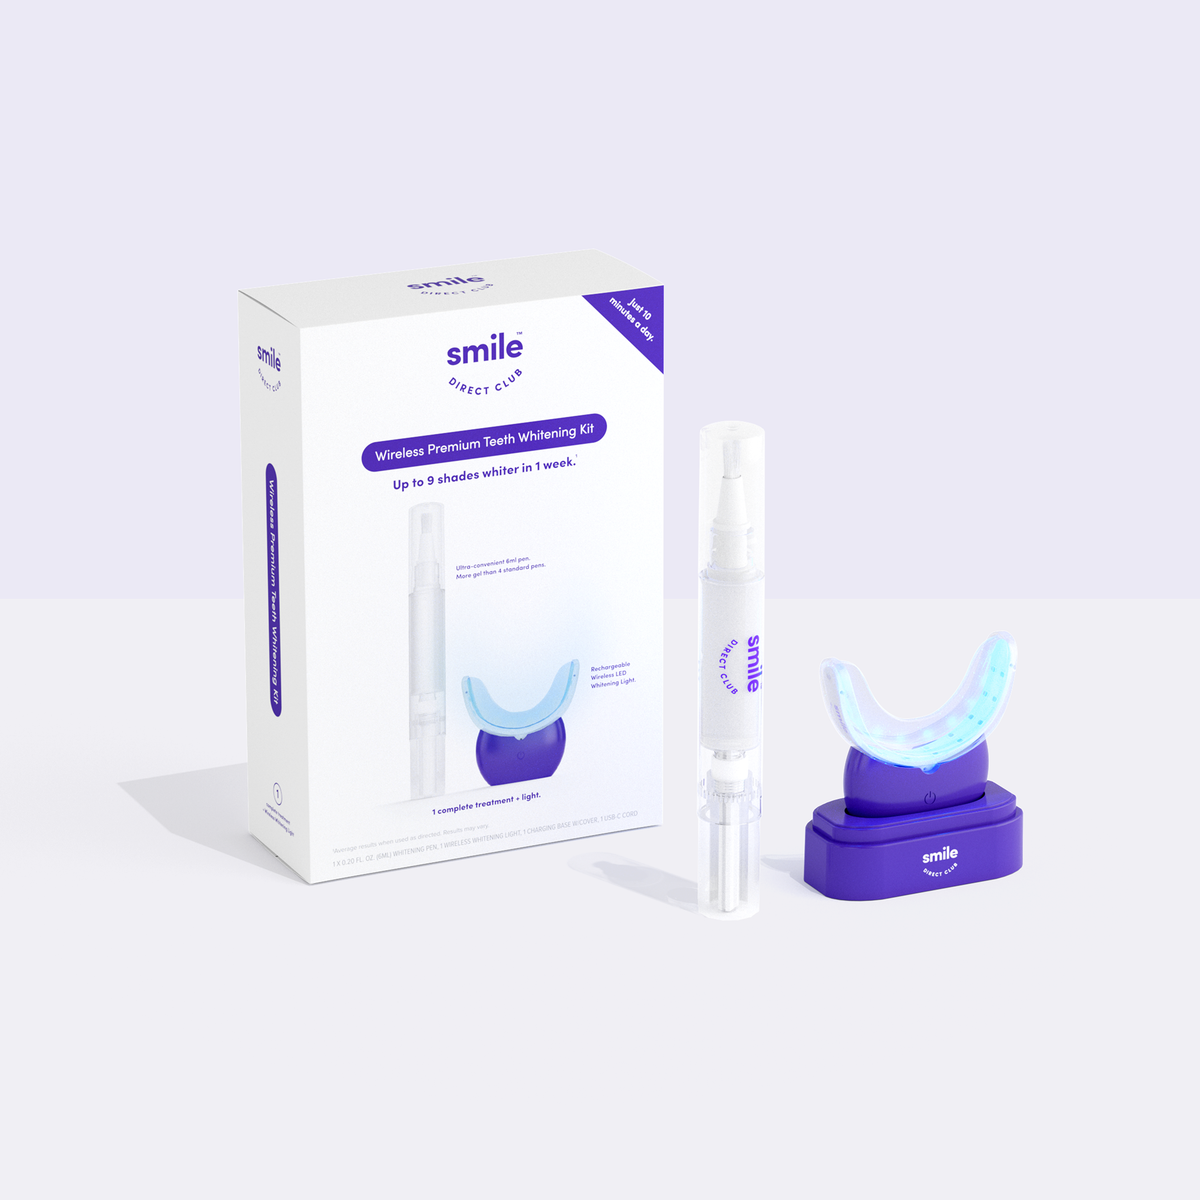 Wireless Premium Teeth Whitening Kit with LED Light